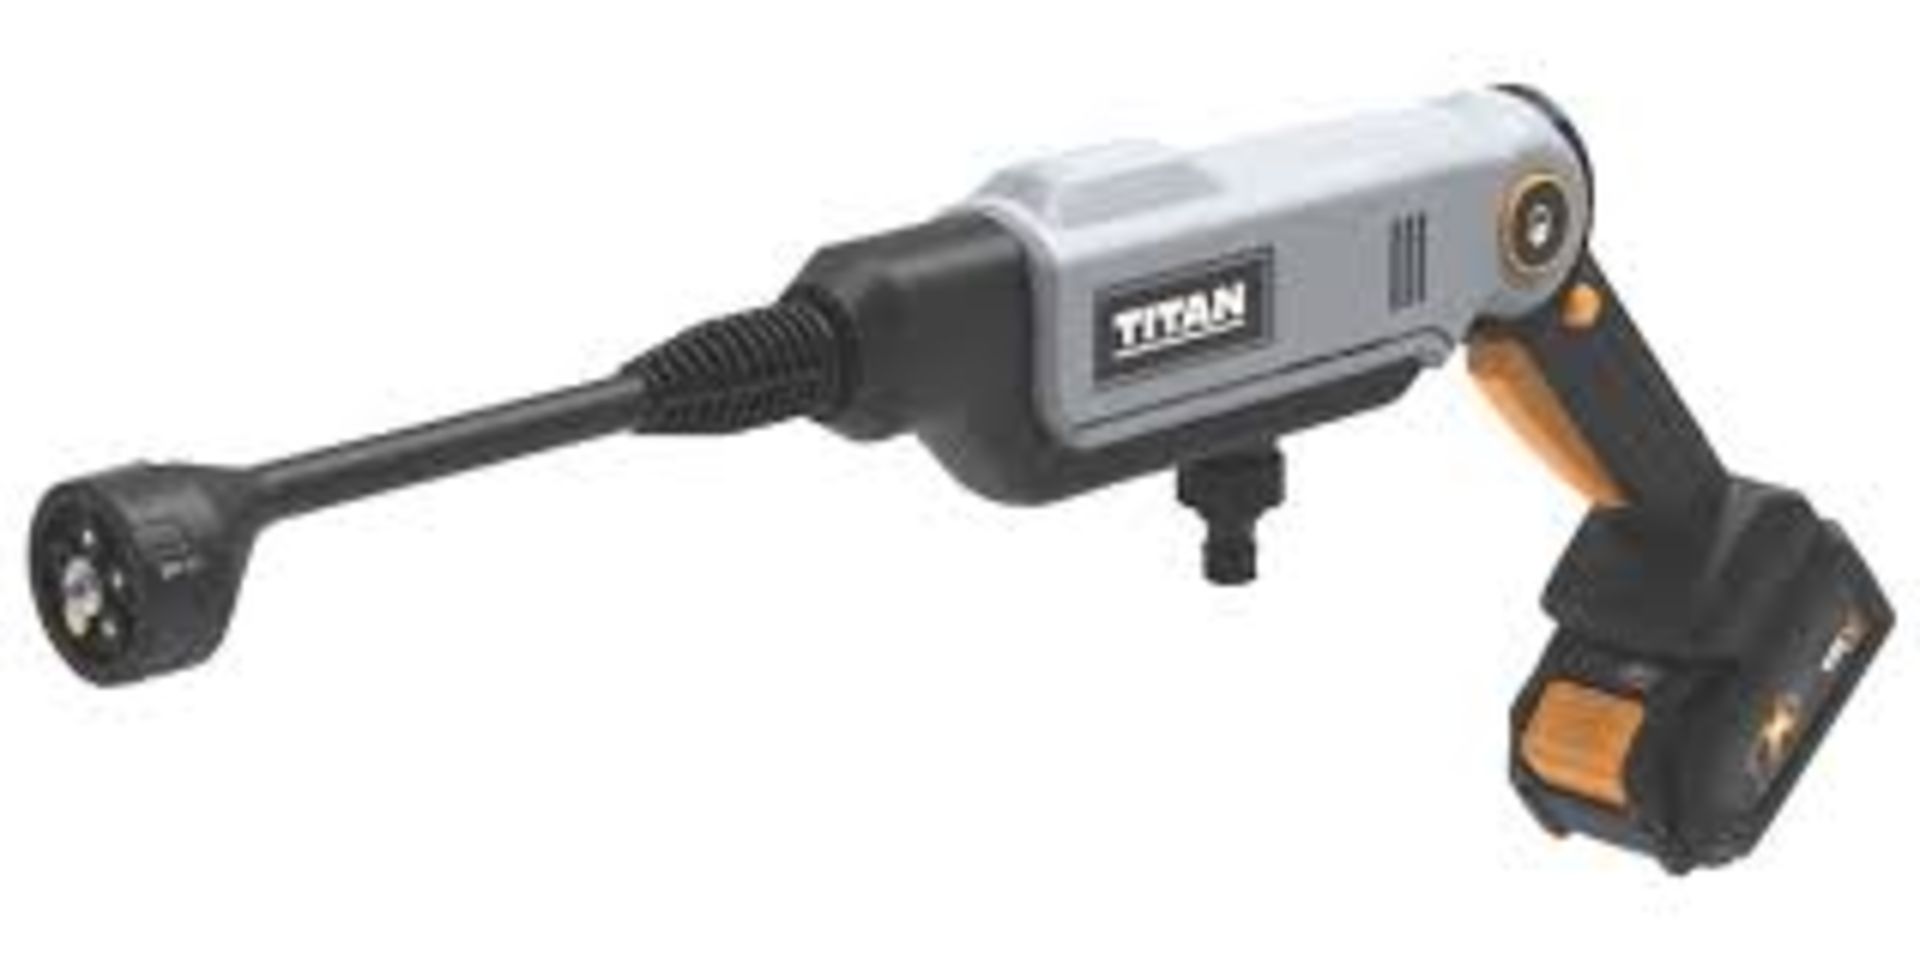 TITAN TTI855PRW 22BAR 18V 1 X 5.0AH LI-ION CORDLESS HAND-HELD PRESSURE WASHER. RRP £149.99. - P4. 6m